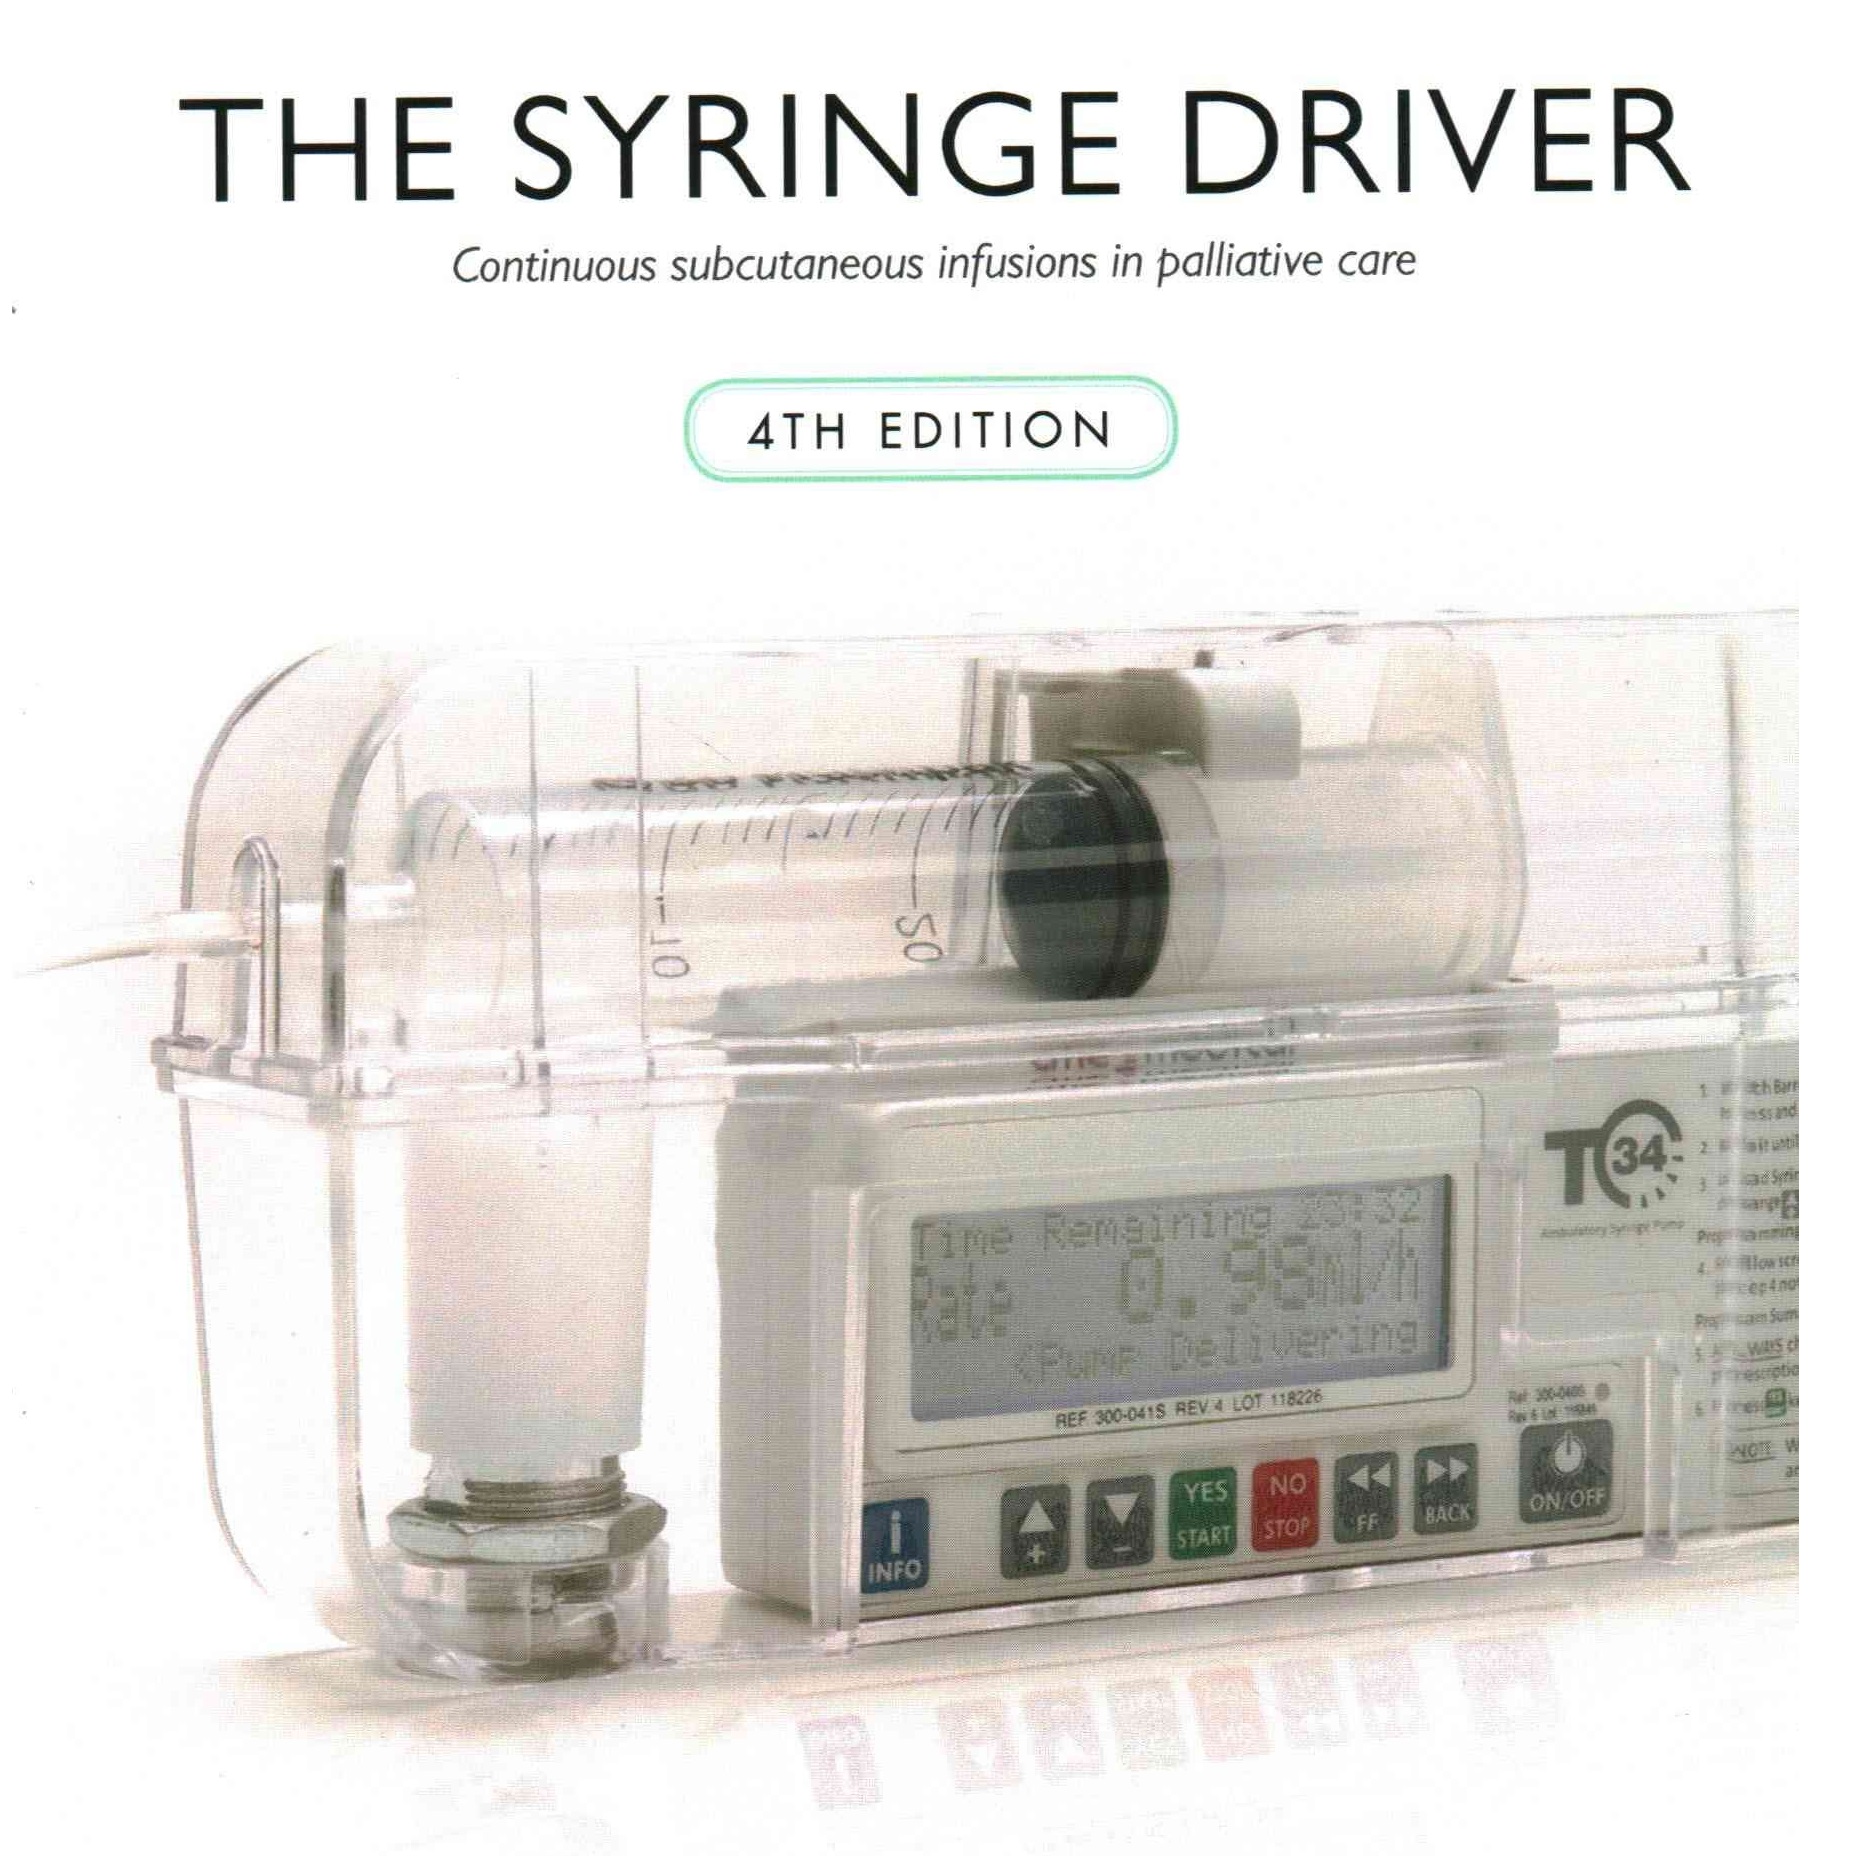 The Syringe Driver logo